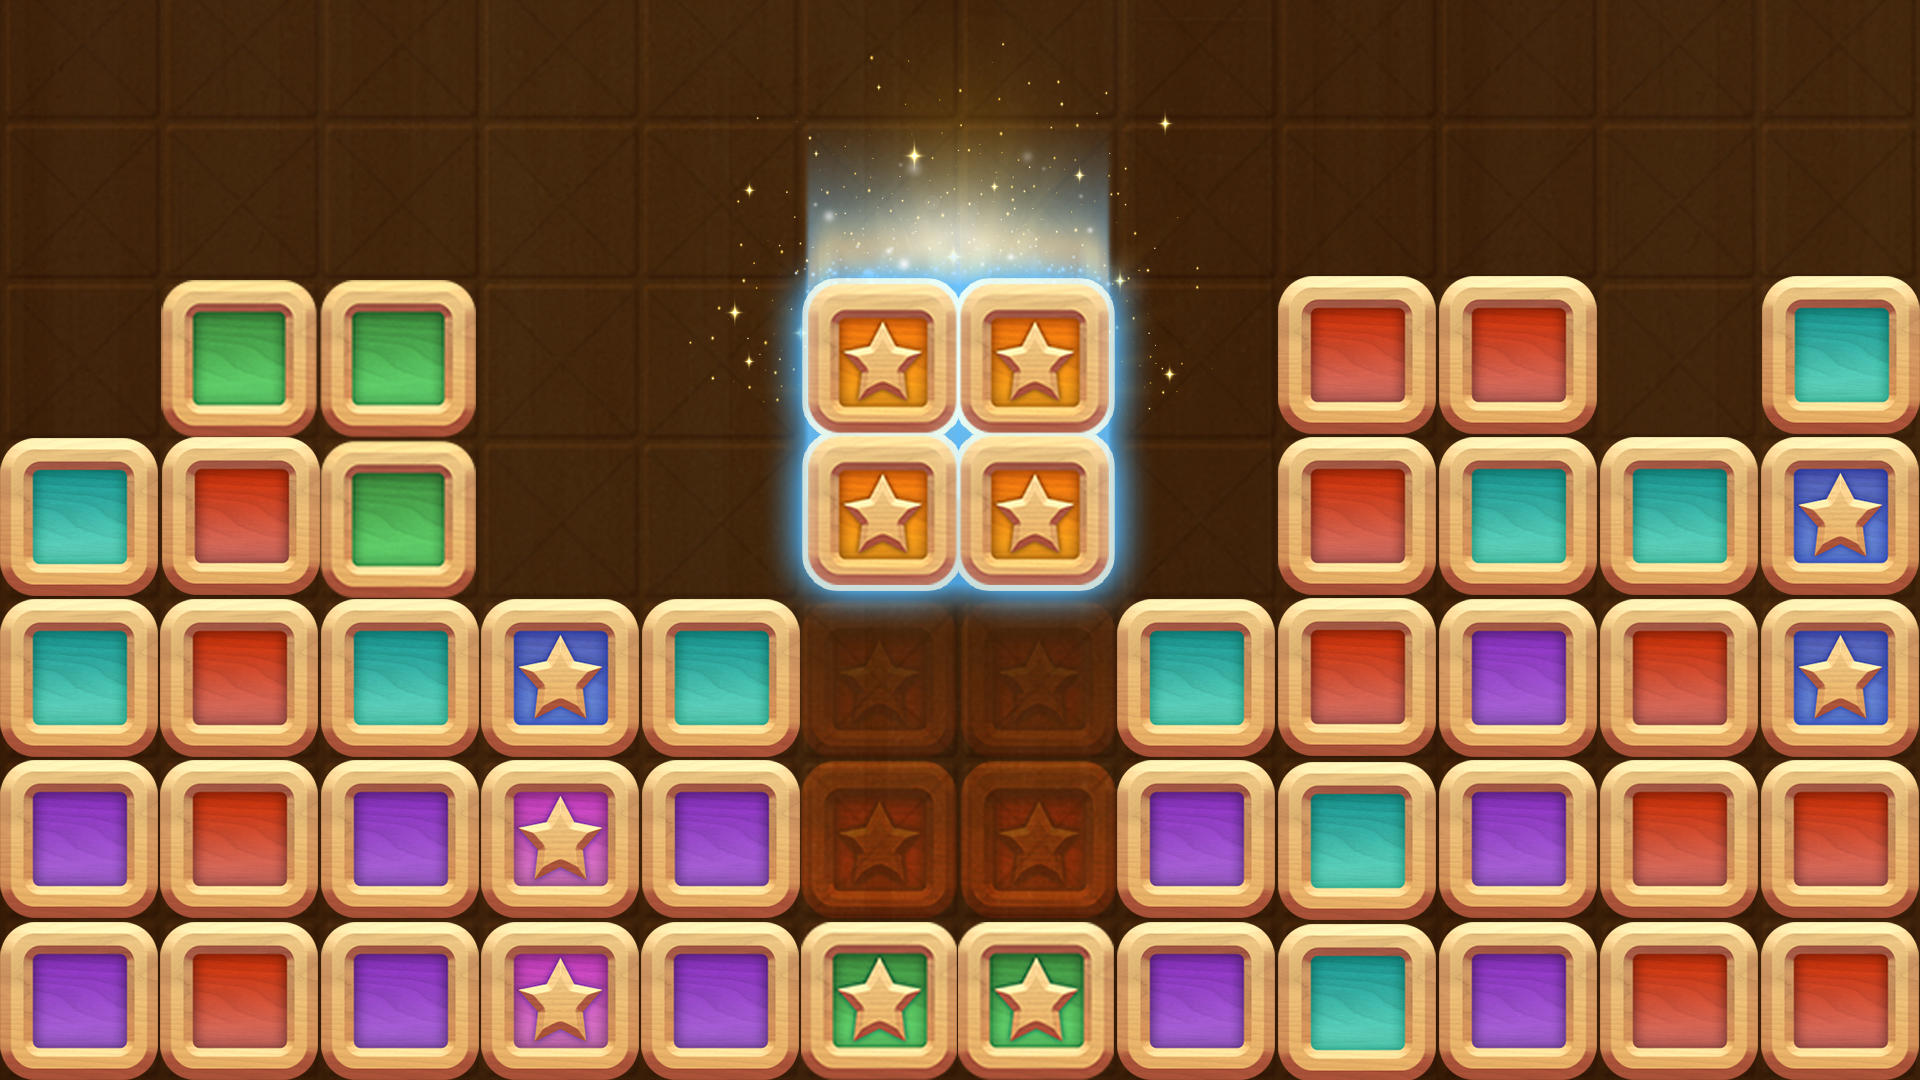 Block Puzzle: Star Finderのキャプチャ